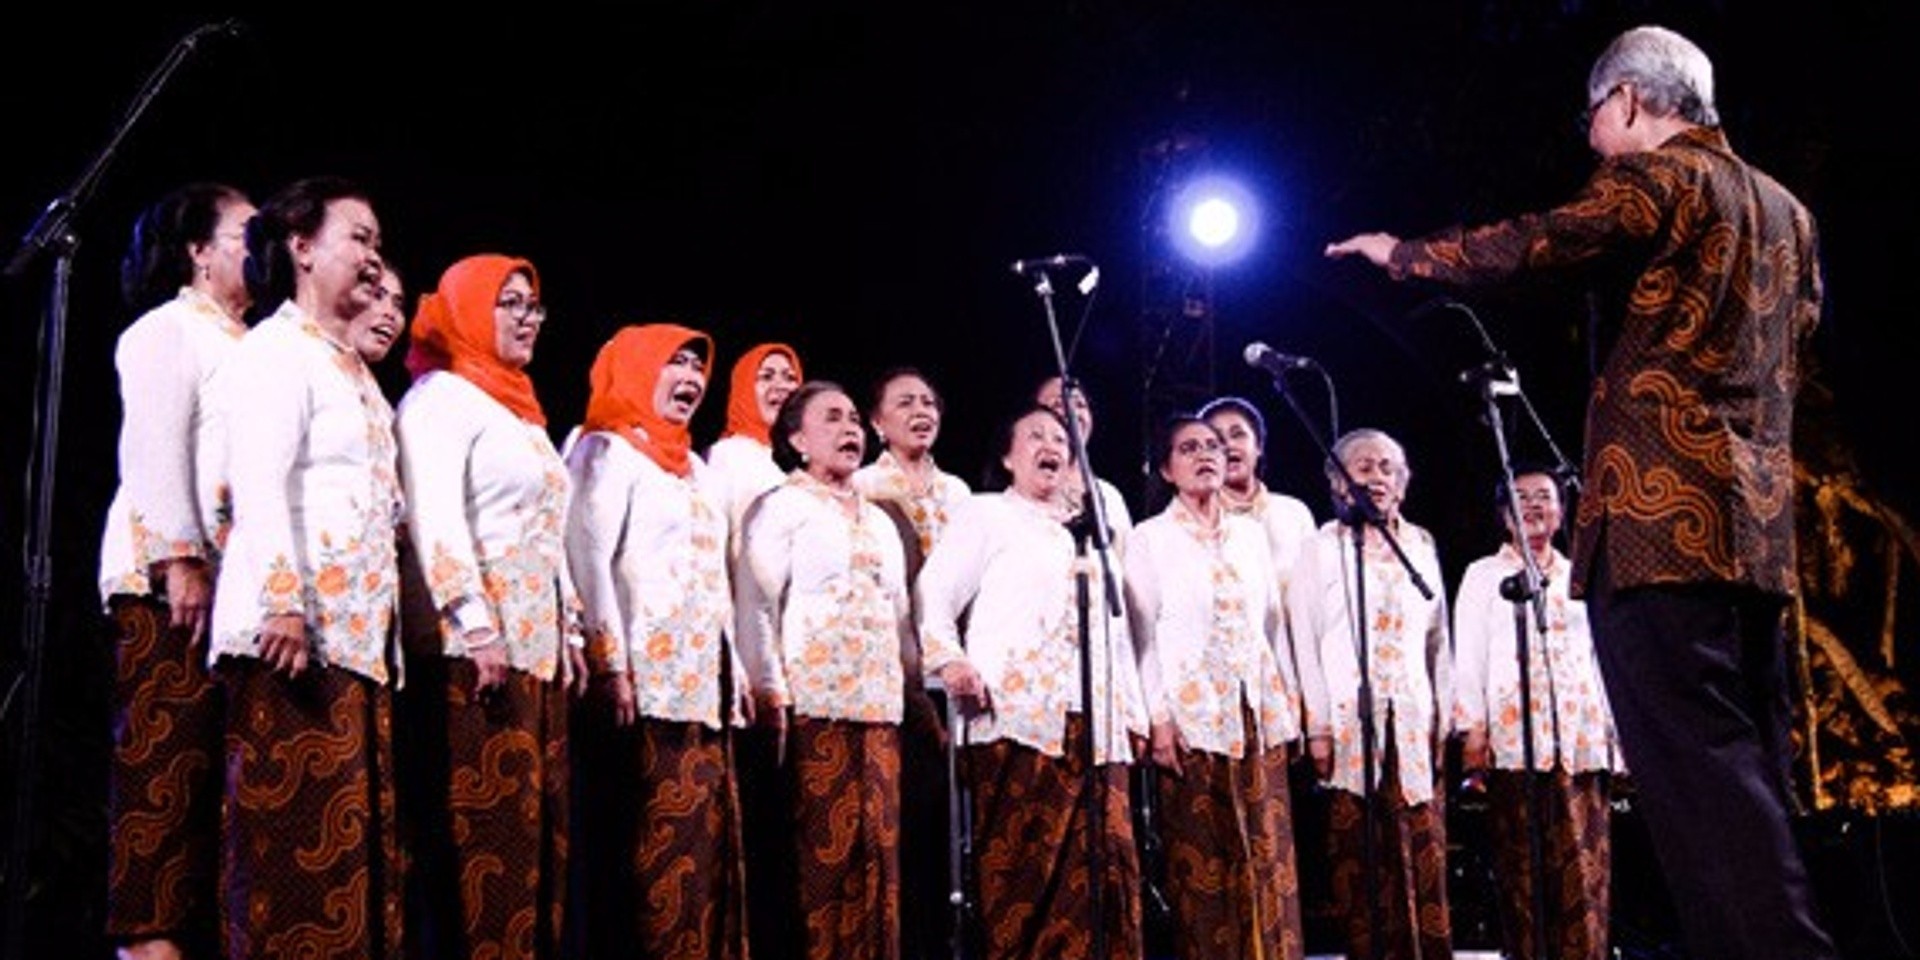 Indonesian choir Dialita releases a harrowing LP of songs written in prisons